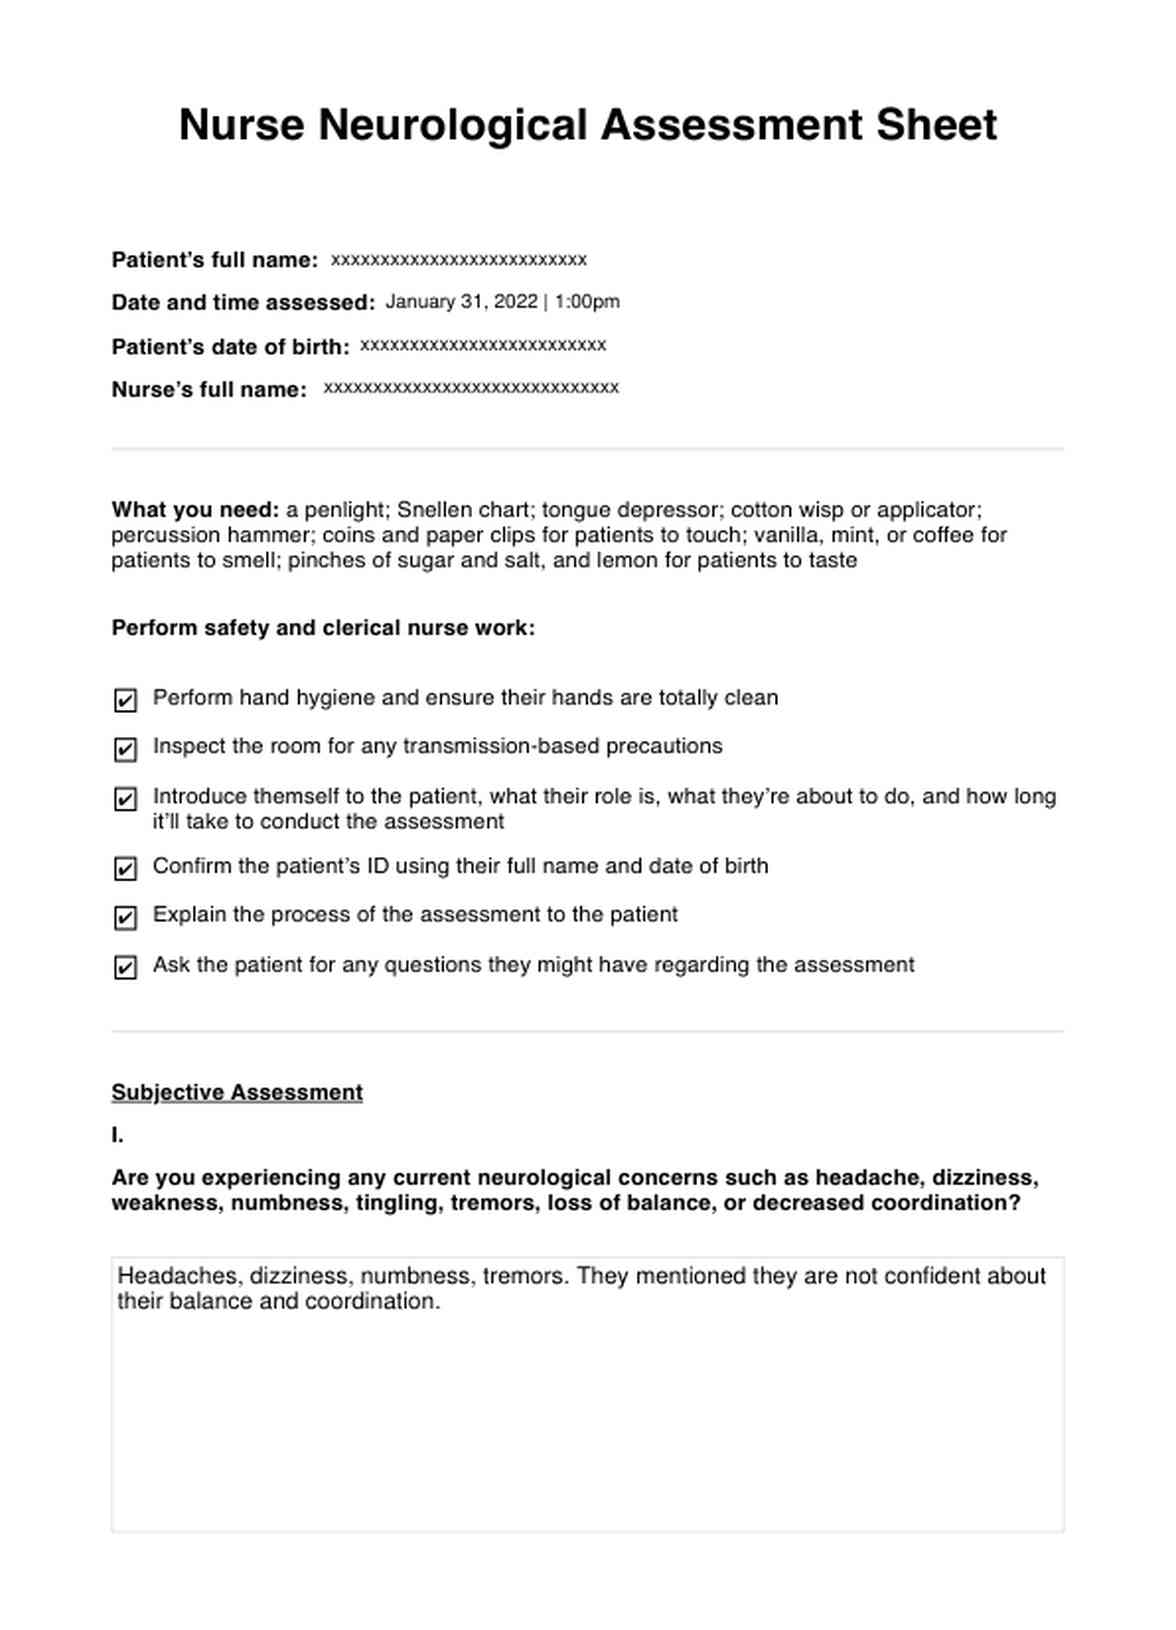 Nurse Neurological Assessment PDF Example